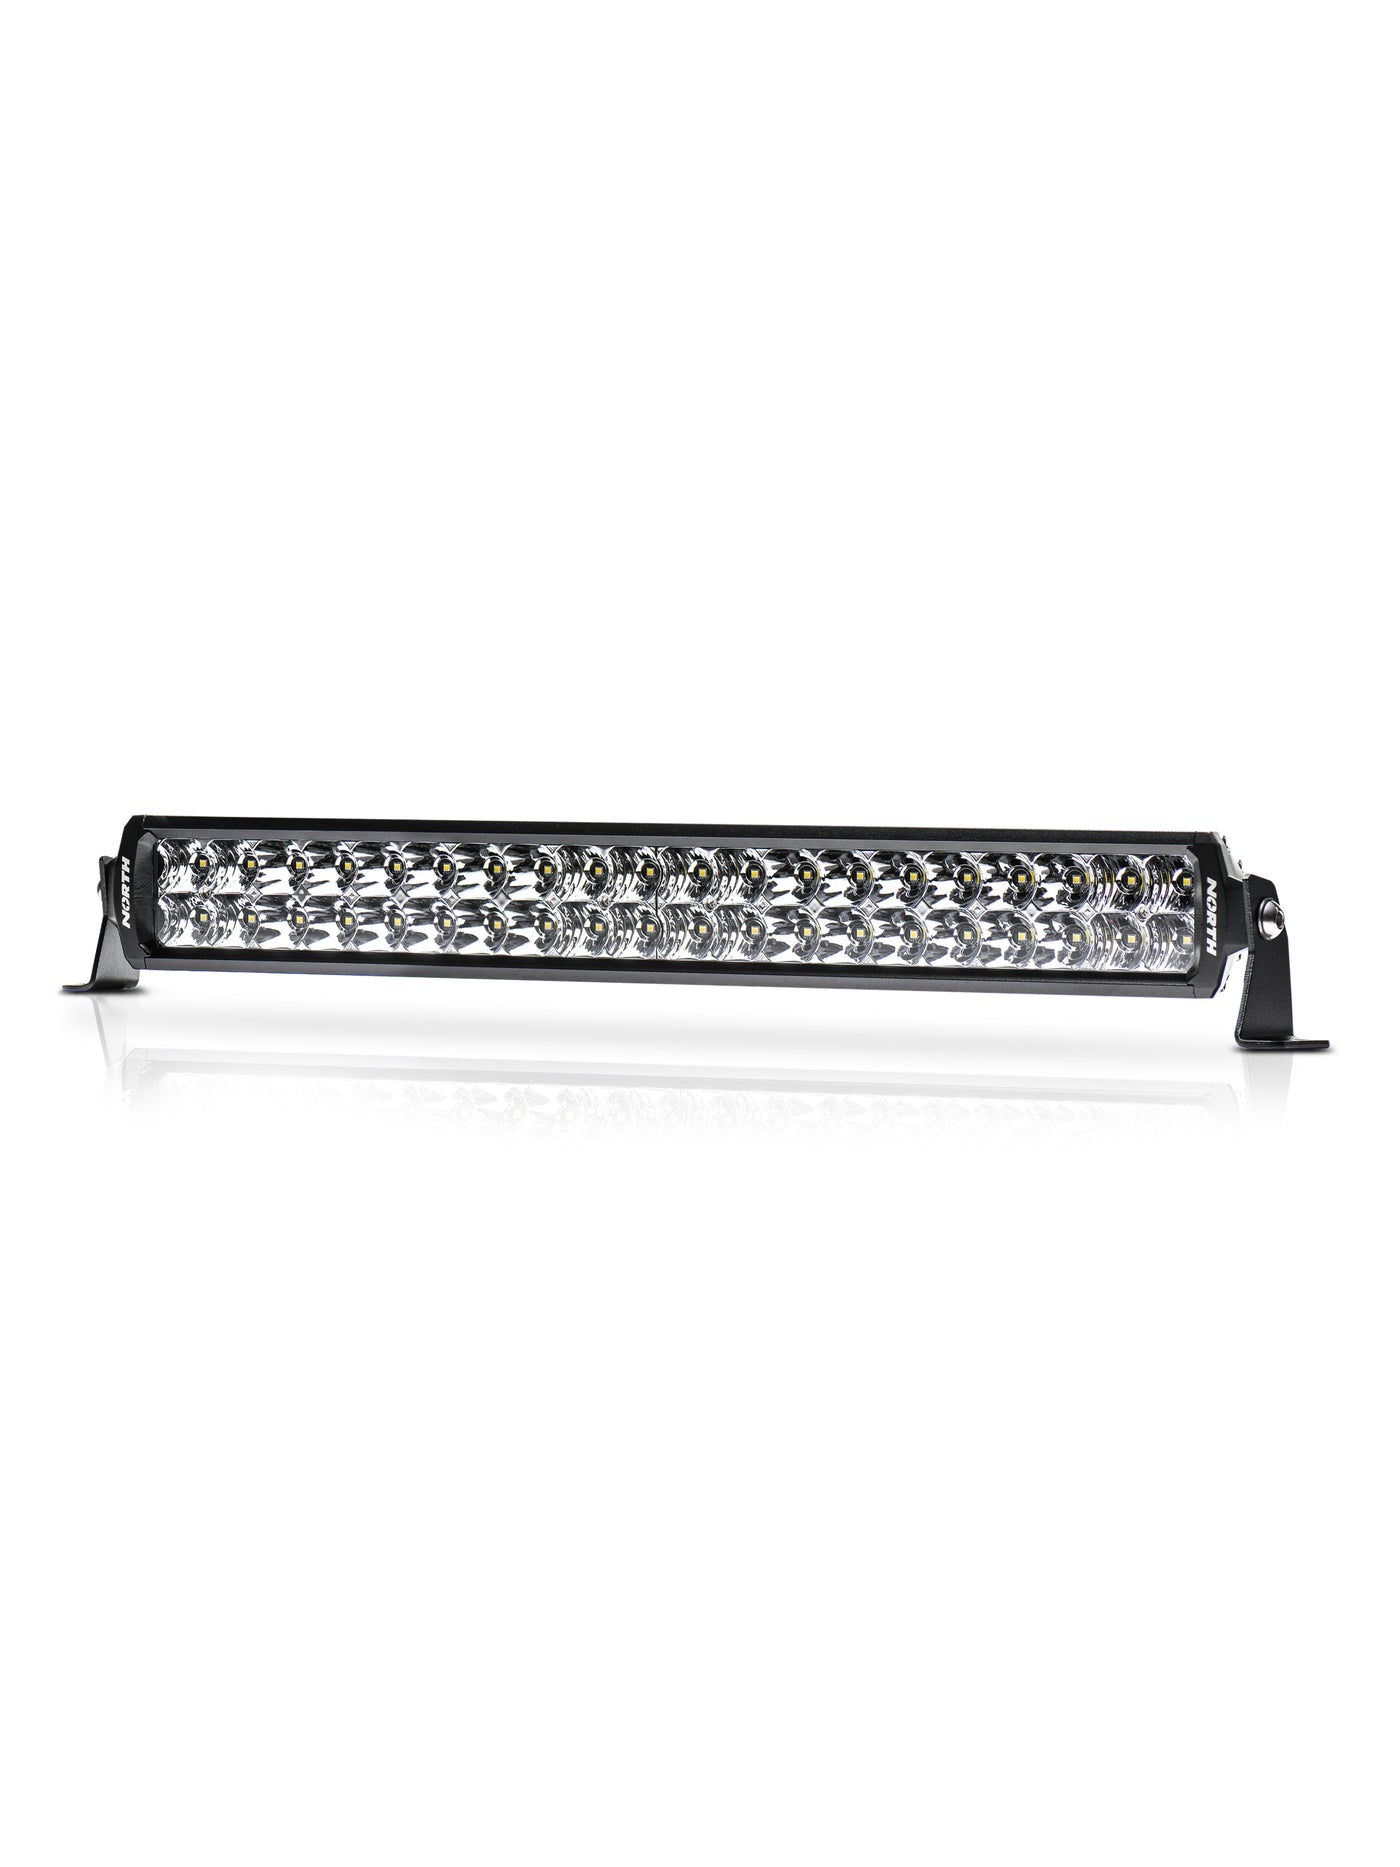 20" Dual Row LED Light Bar - North Lights